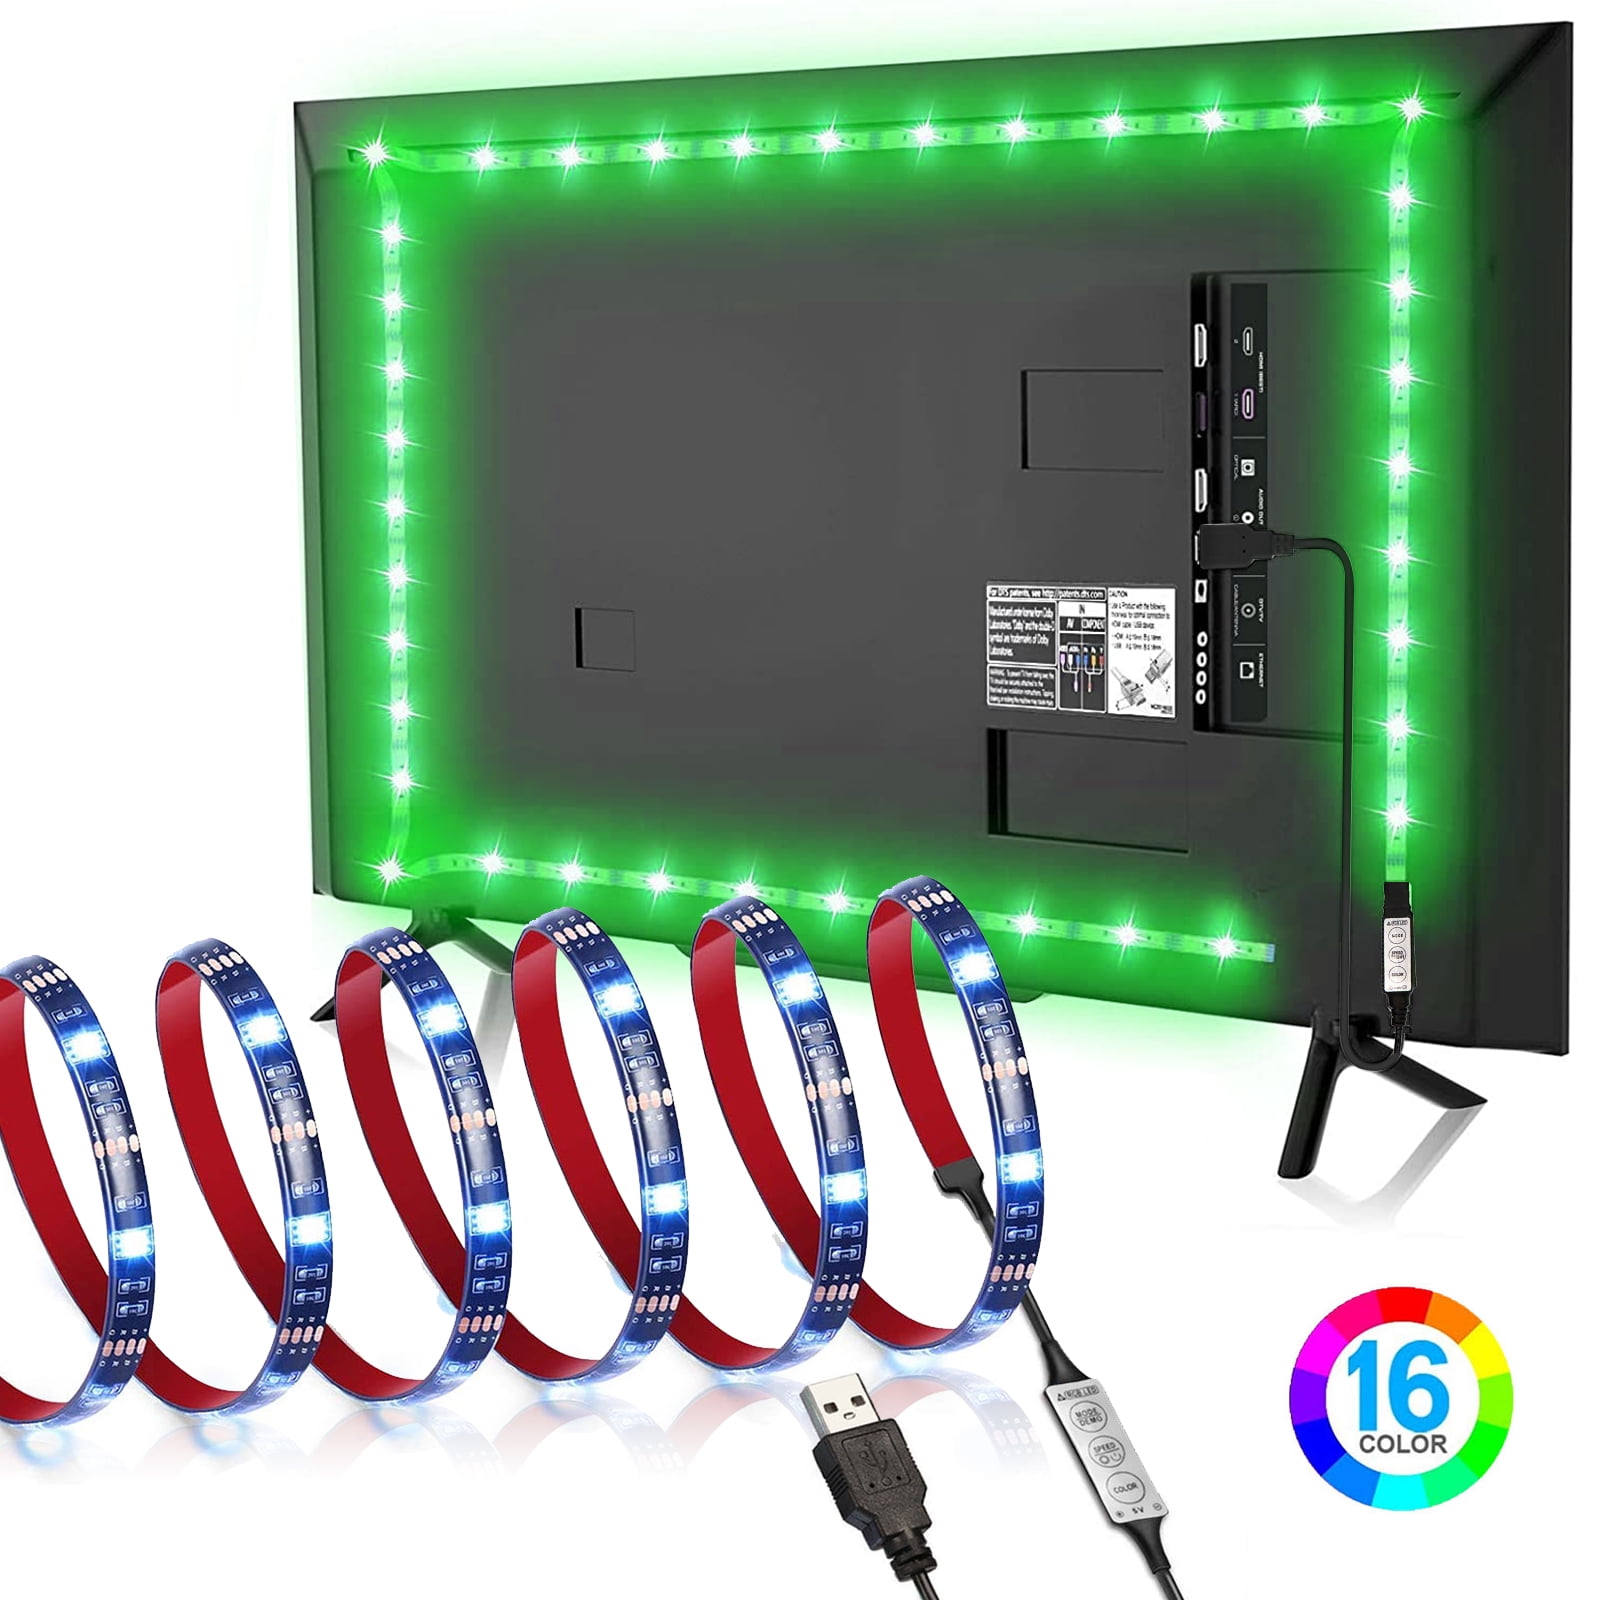 5V USB Cable 2835 LED Strip String lamp TV PC Monitor Backlight Bias light 4M 